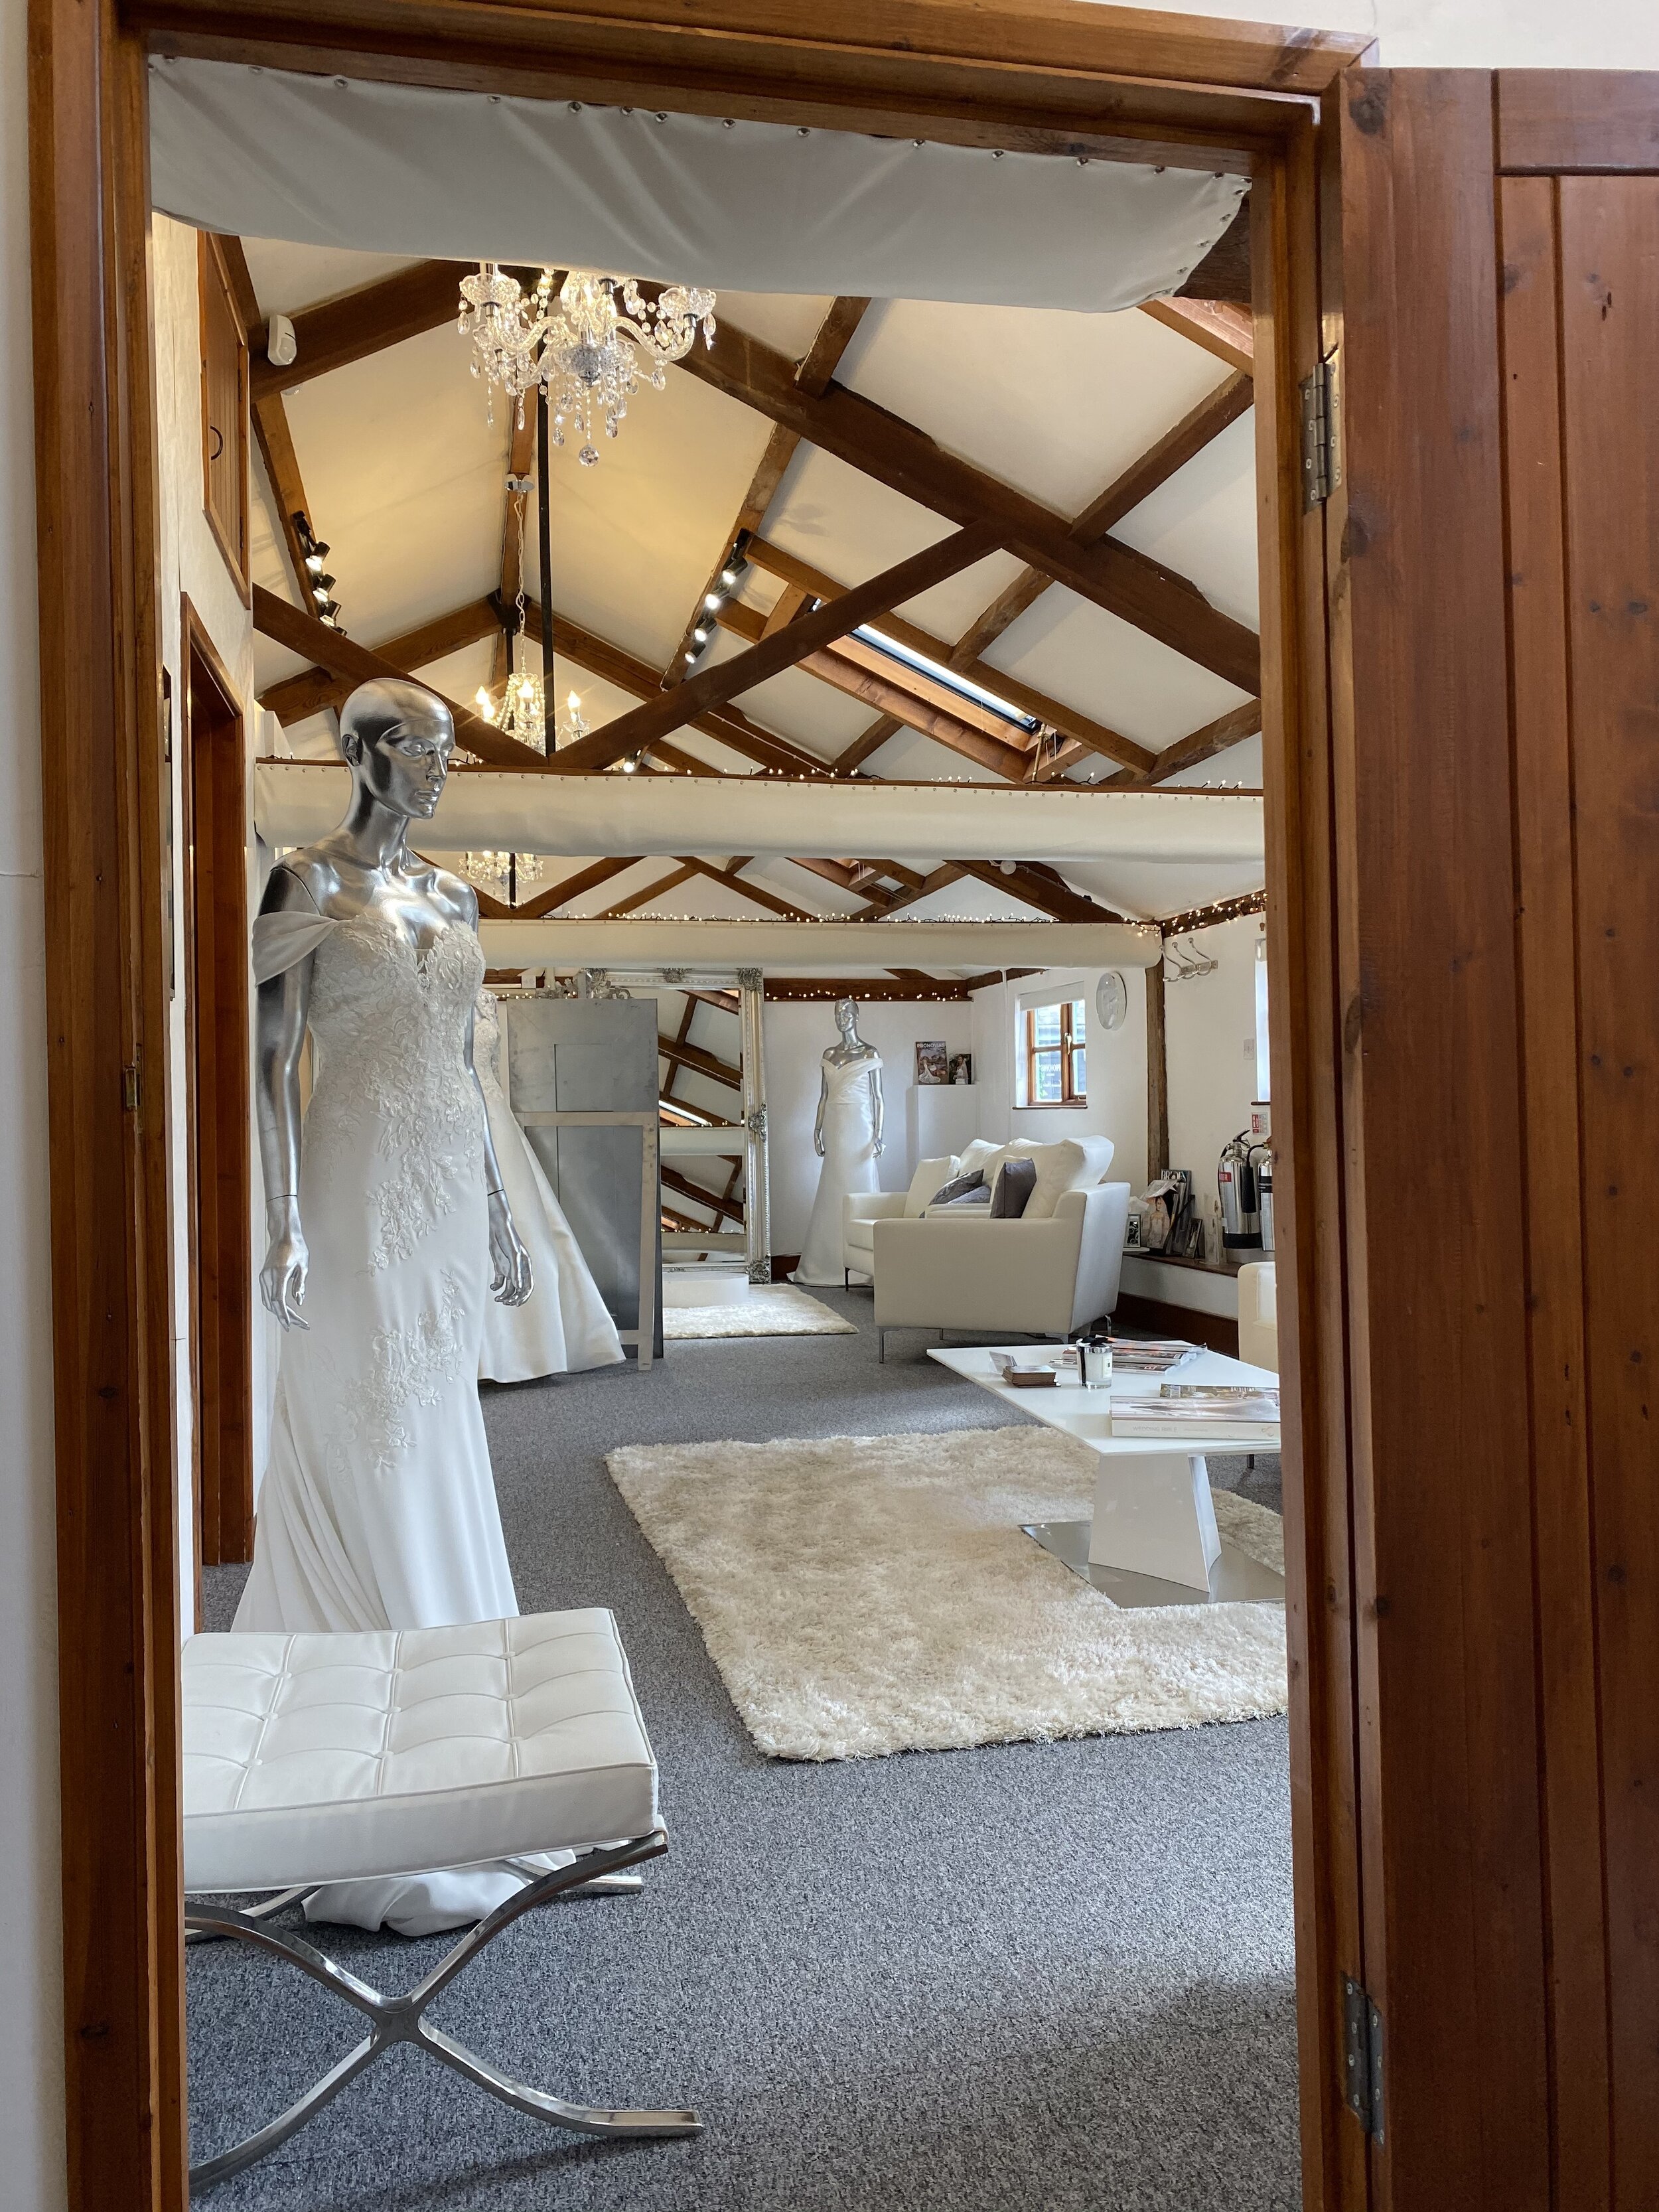 Berkeley Bridal Wedding dress shop Hertfordshire - Inside.jpg